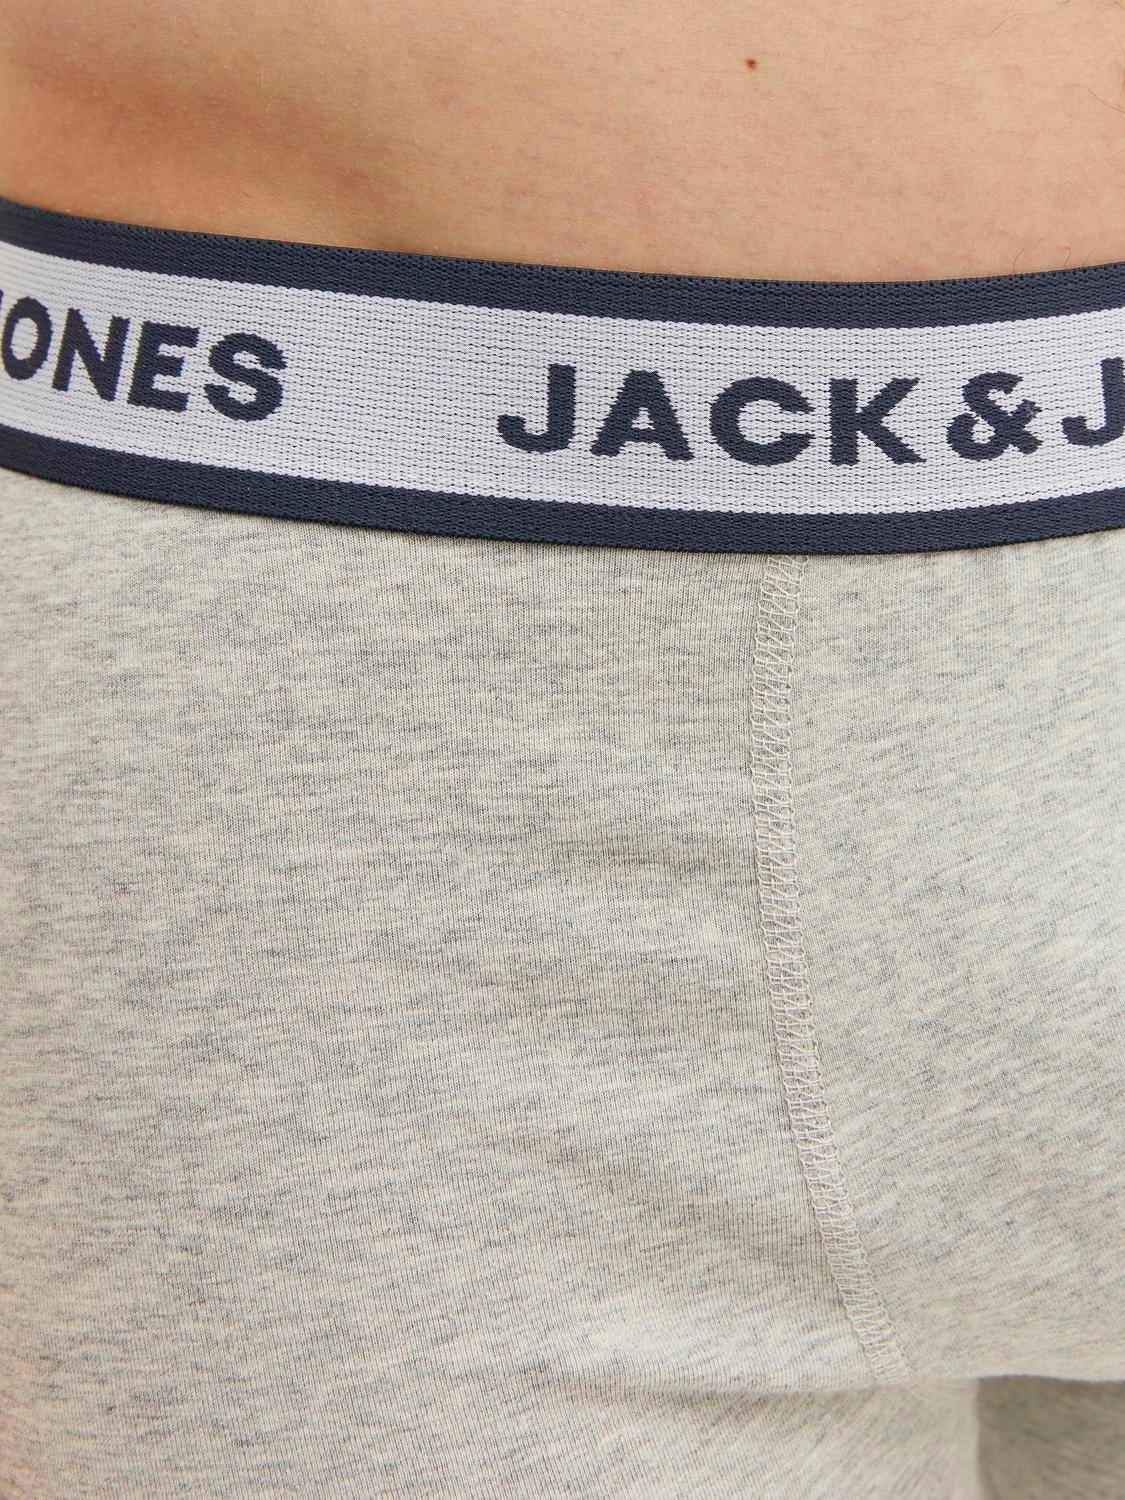 Jack & Jones 3-pack Boxer -Light Grey Melange - 12229576